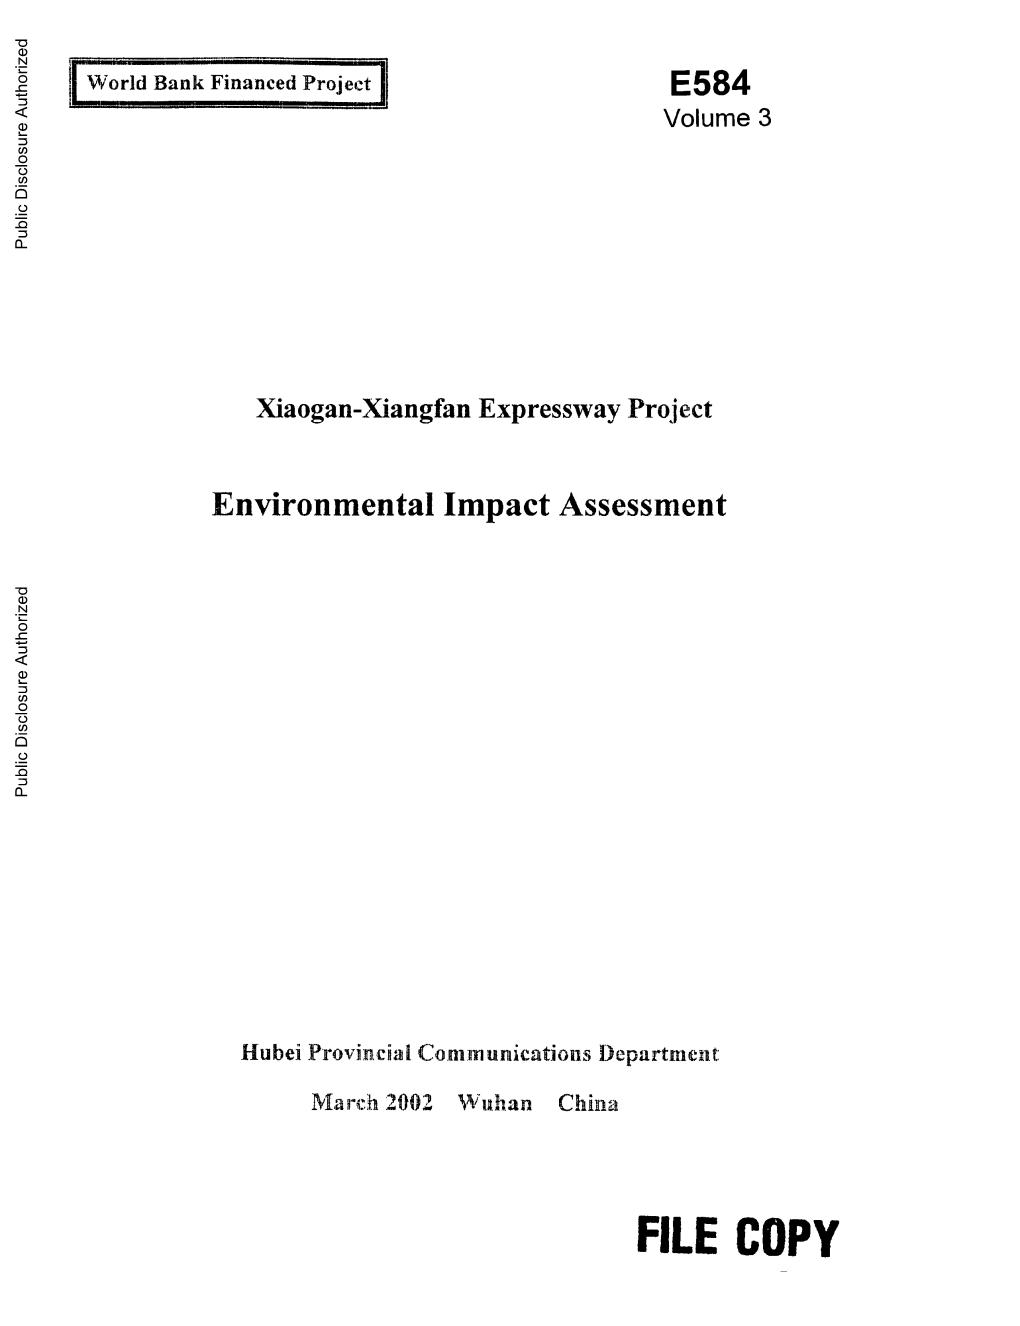 Environmental Impact Assessment Public Disclosure Authorized Public Disclosure Authorized